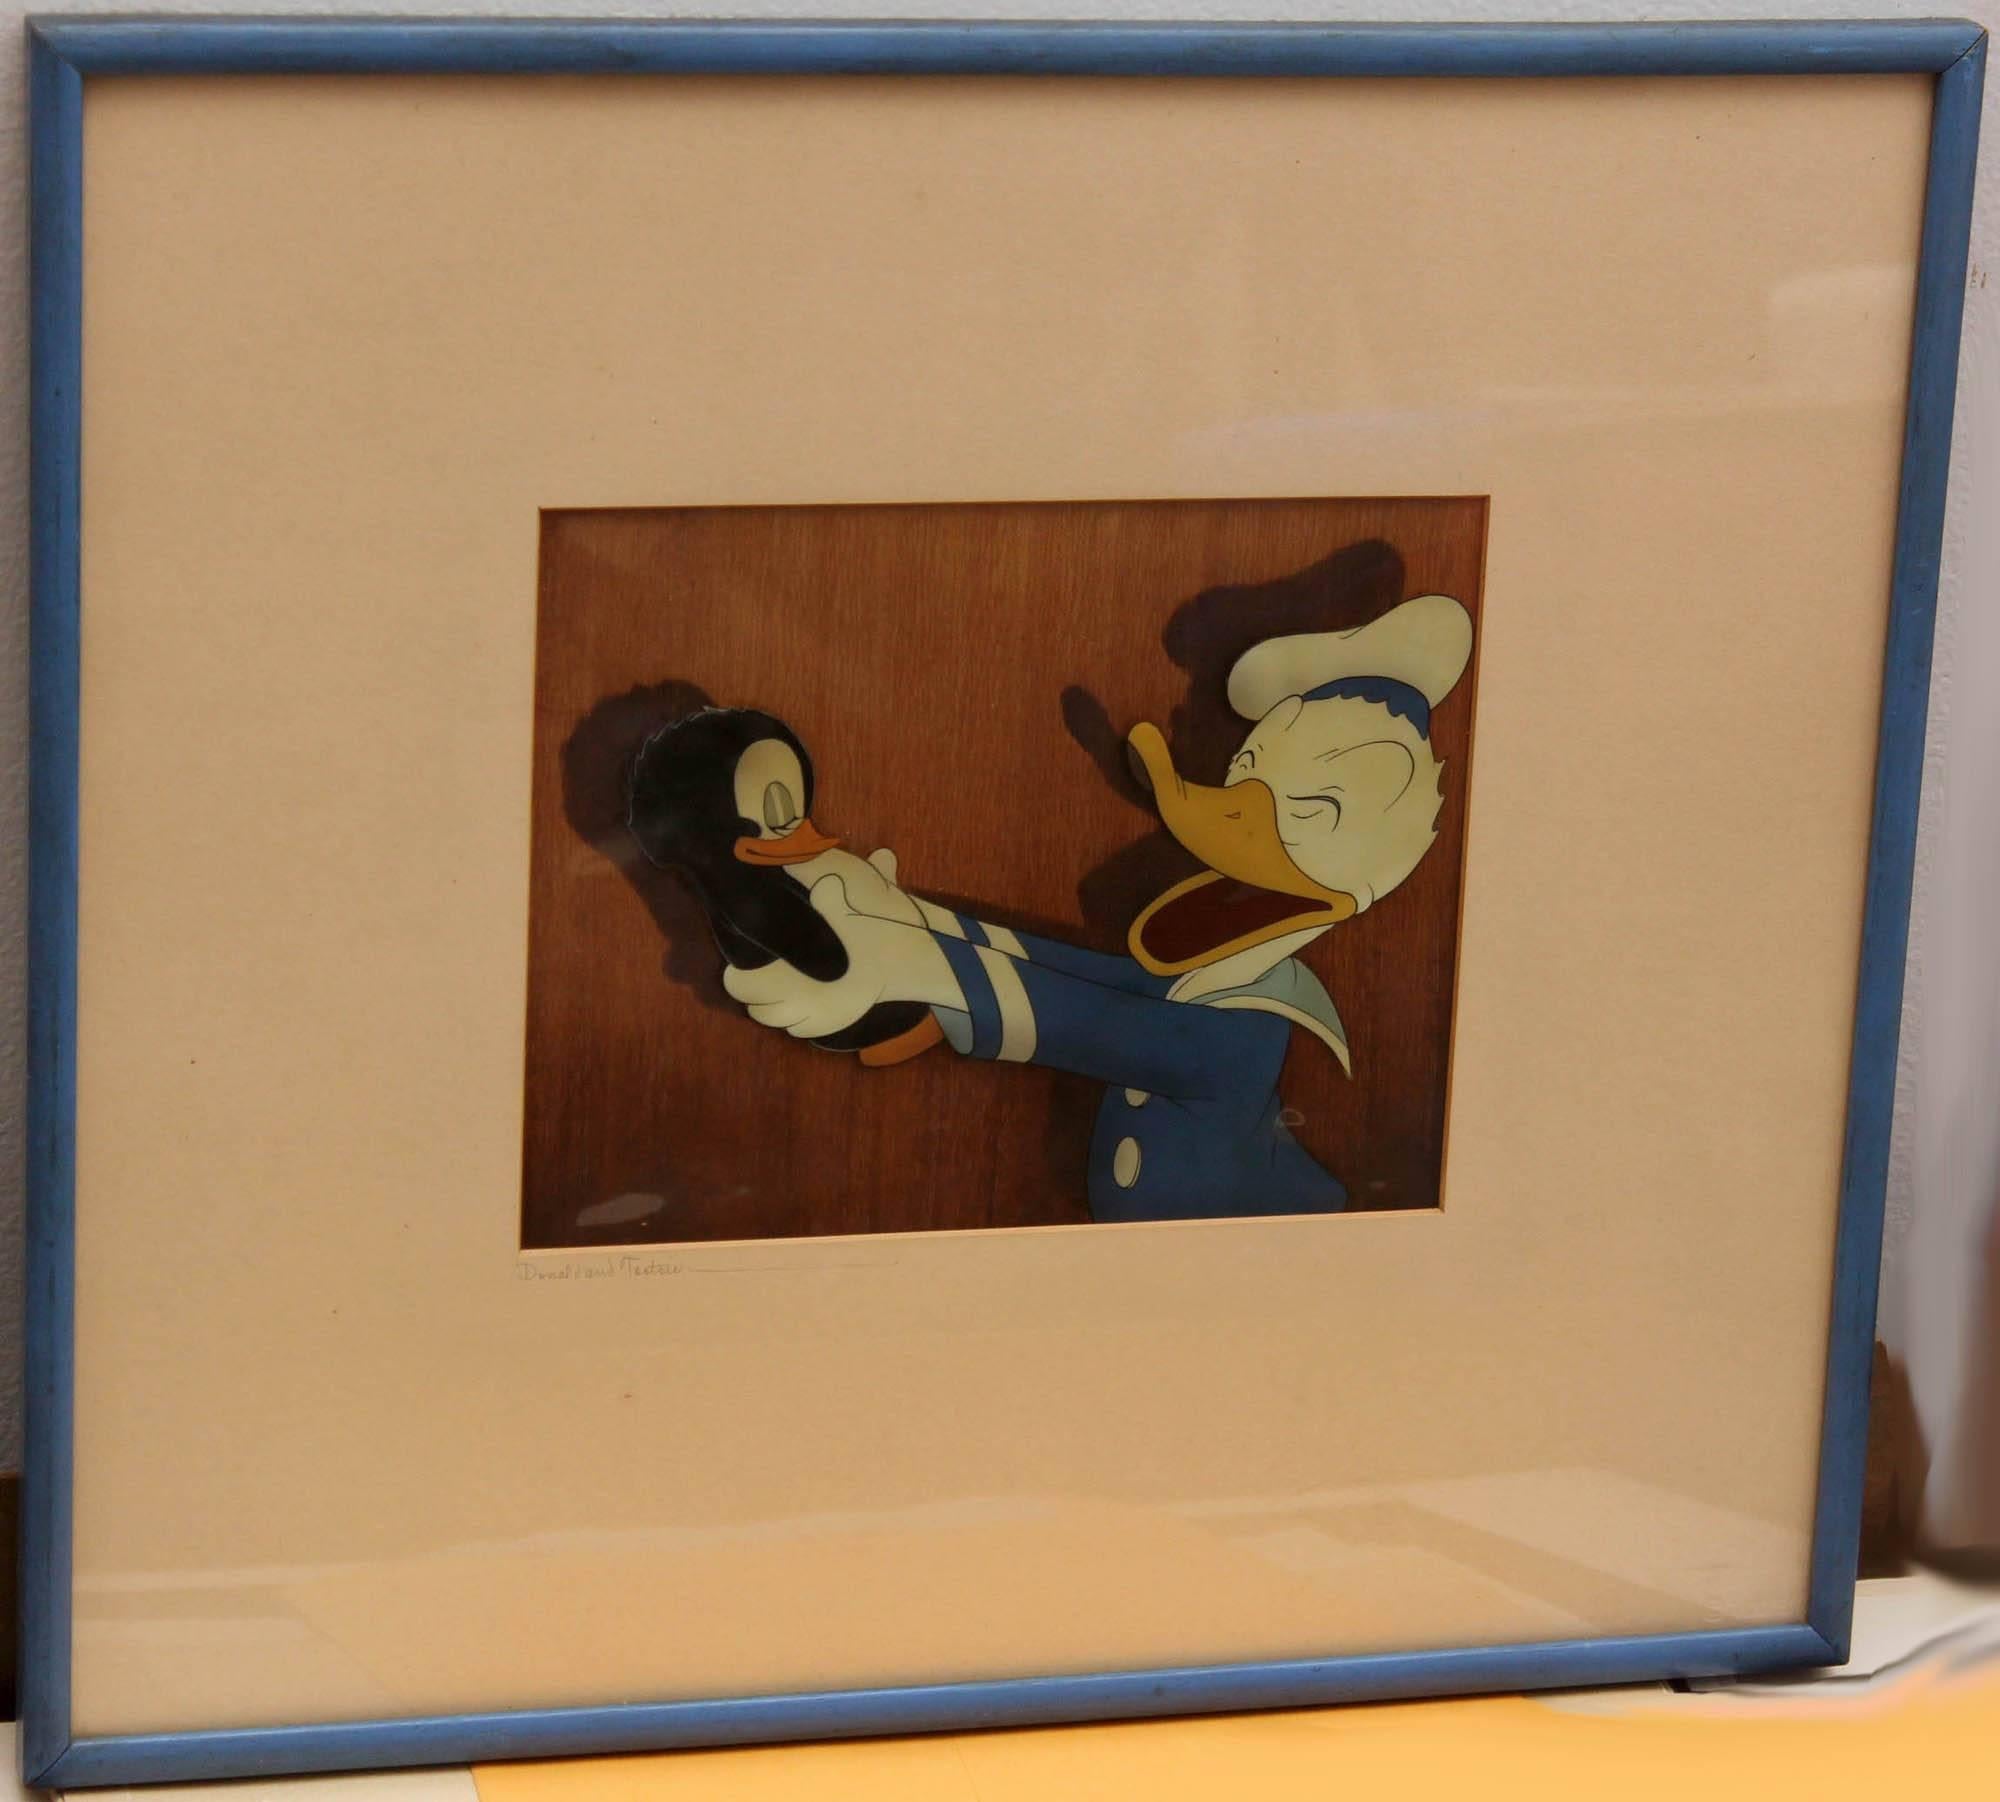 American Donald Duck 1939 Original Animation Art Work from Walt Disney Studios, Vintage